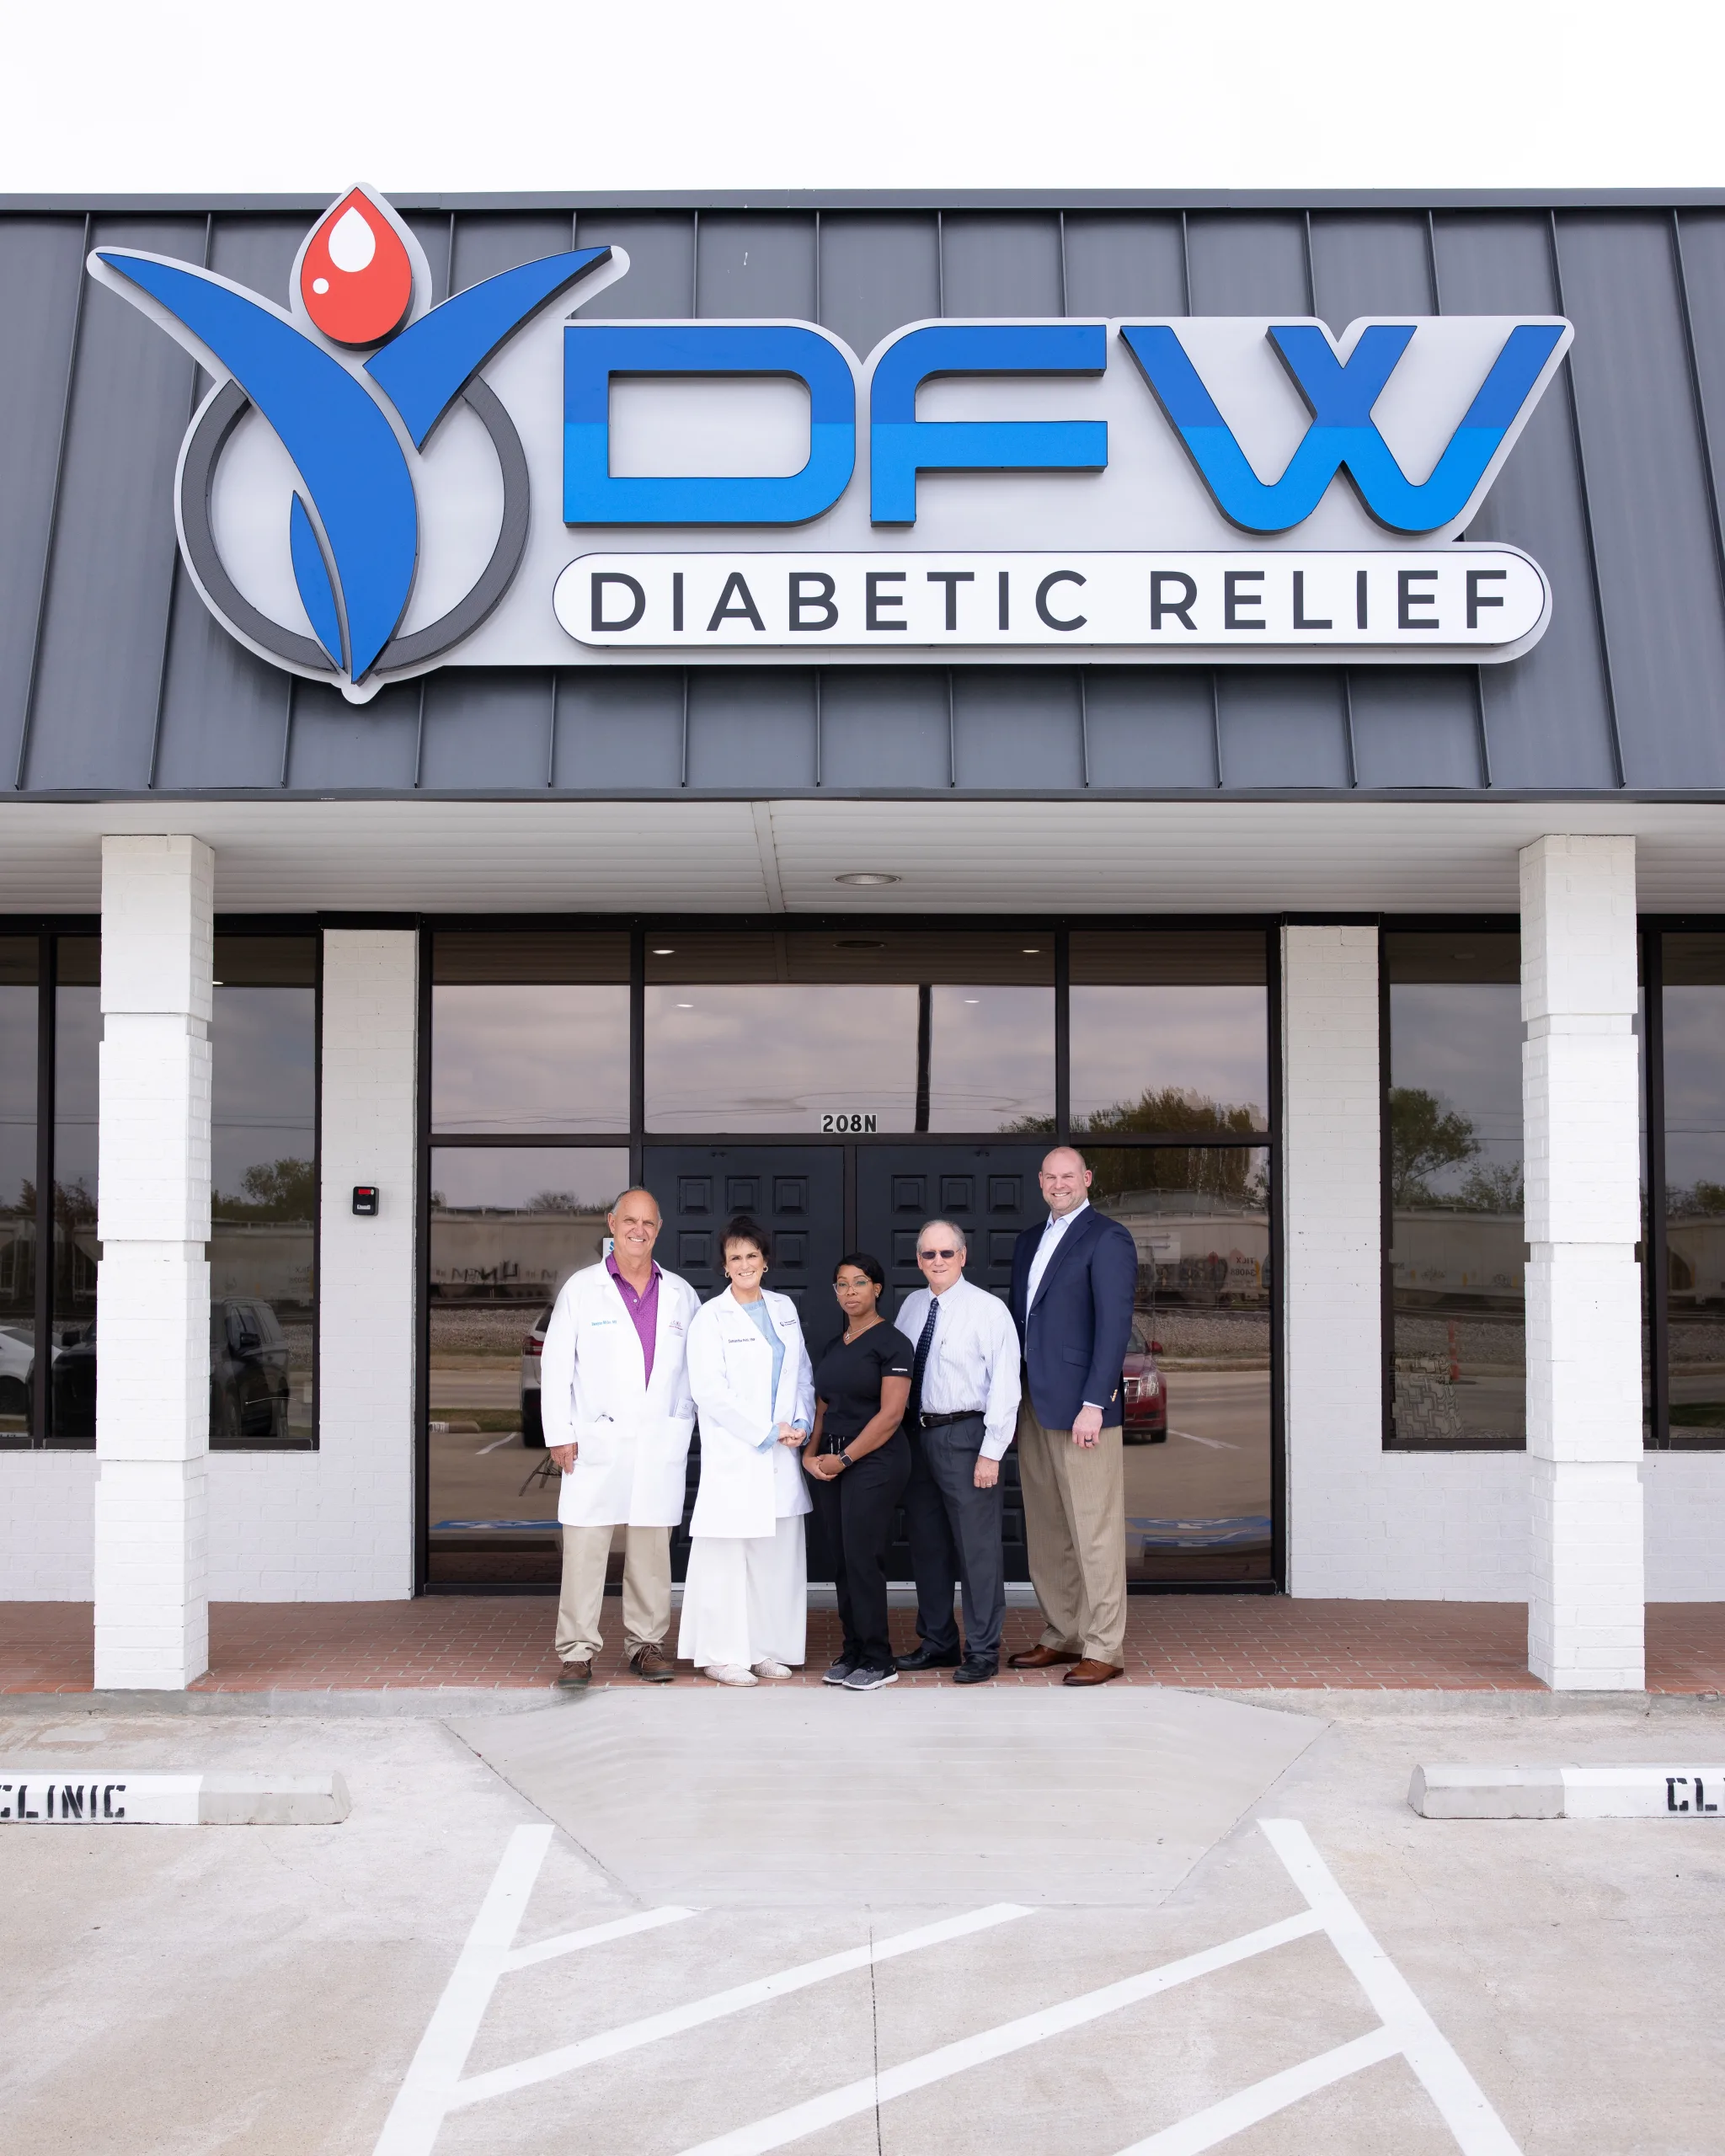 DFW Diabetic Relief